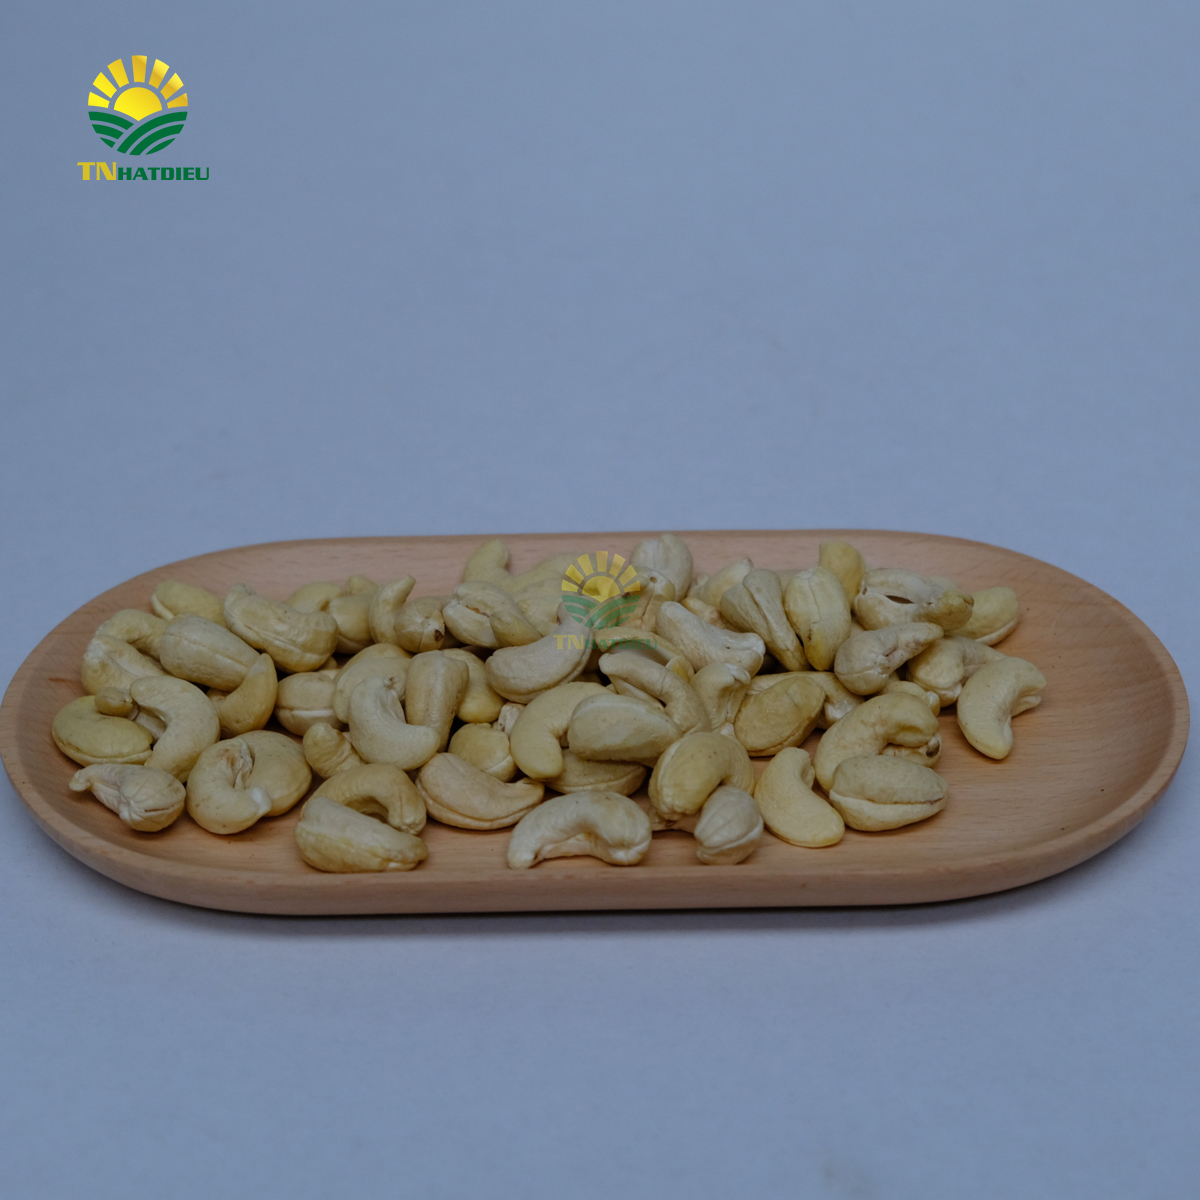 White cashew nuts